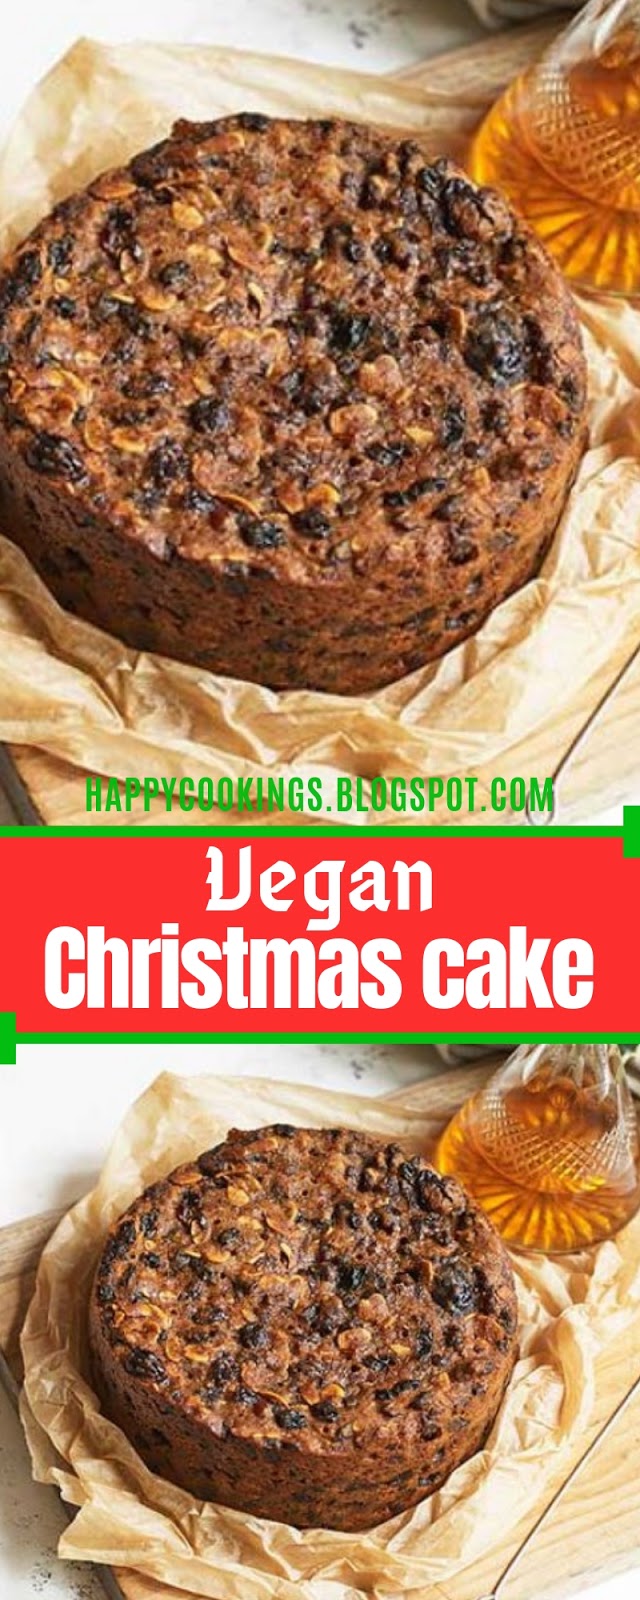 Vegan Christmas cake #Christmas #cake #Vegan